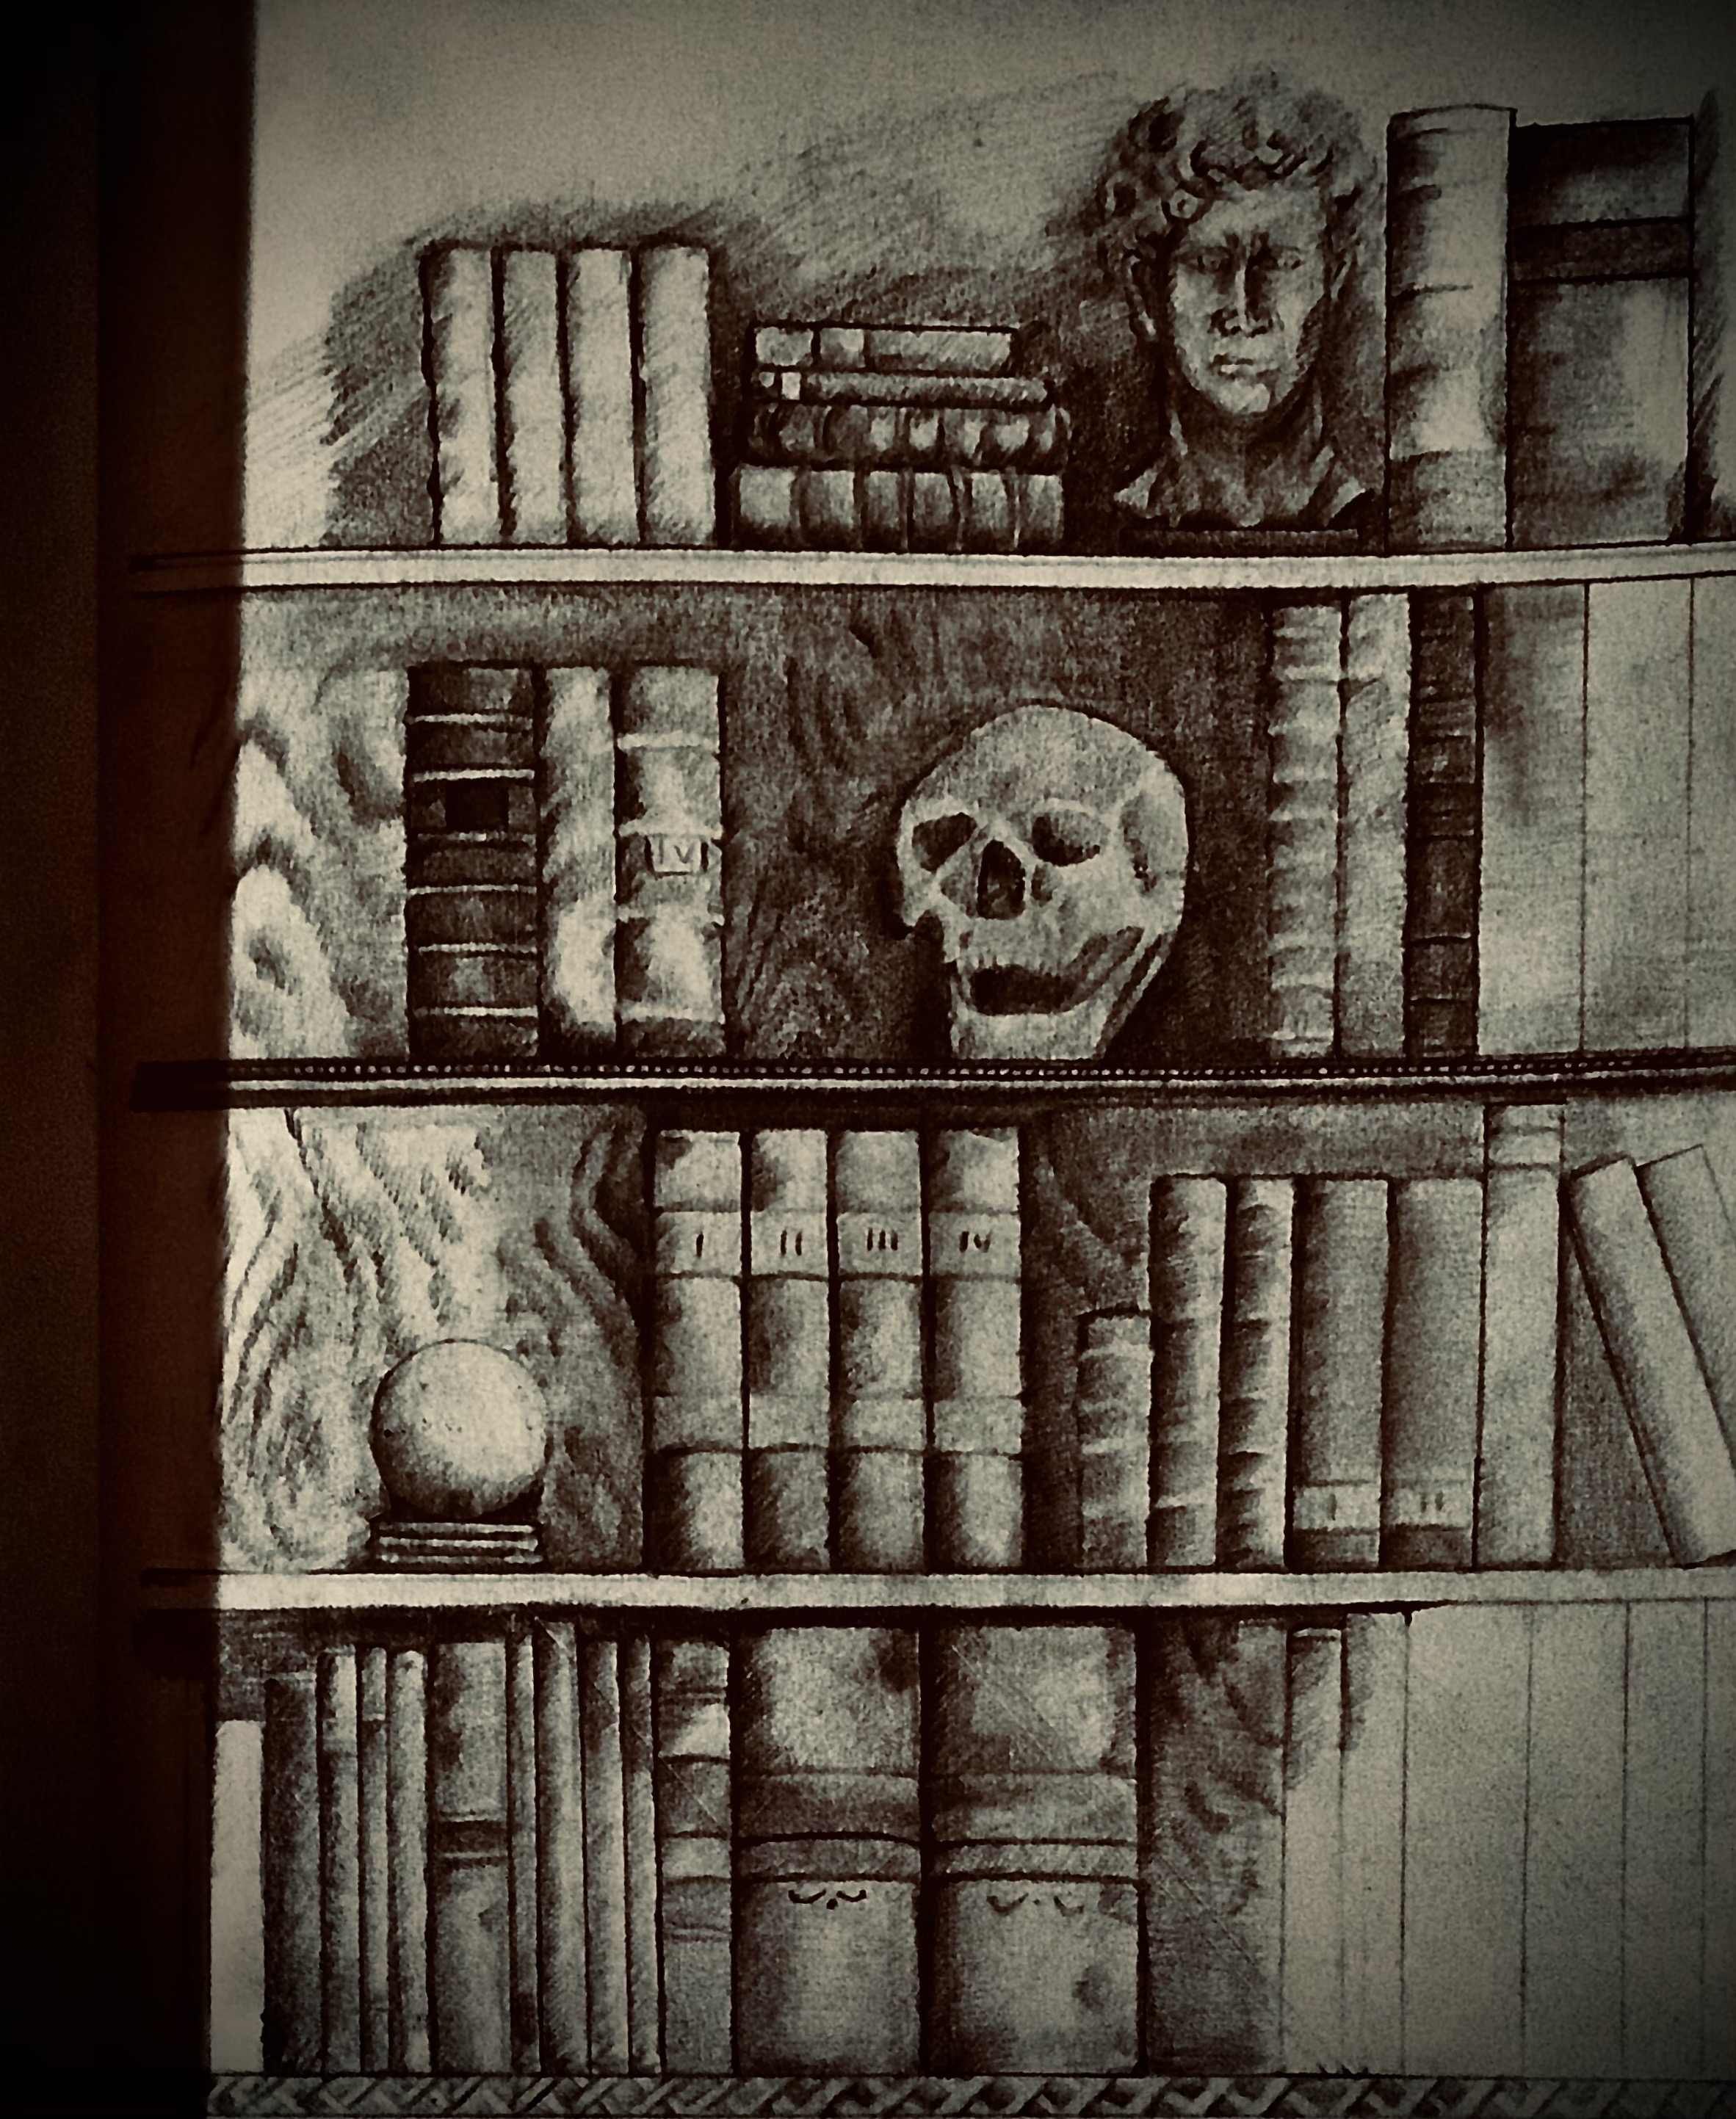 My Bookshelf in pencil by Isahakyan on DeviantArt